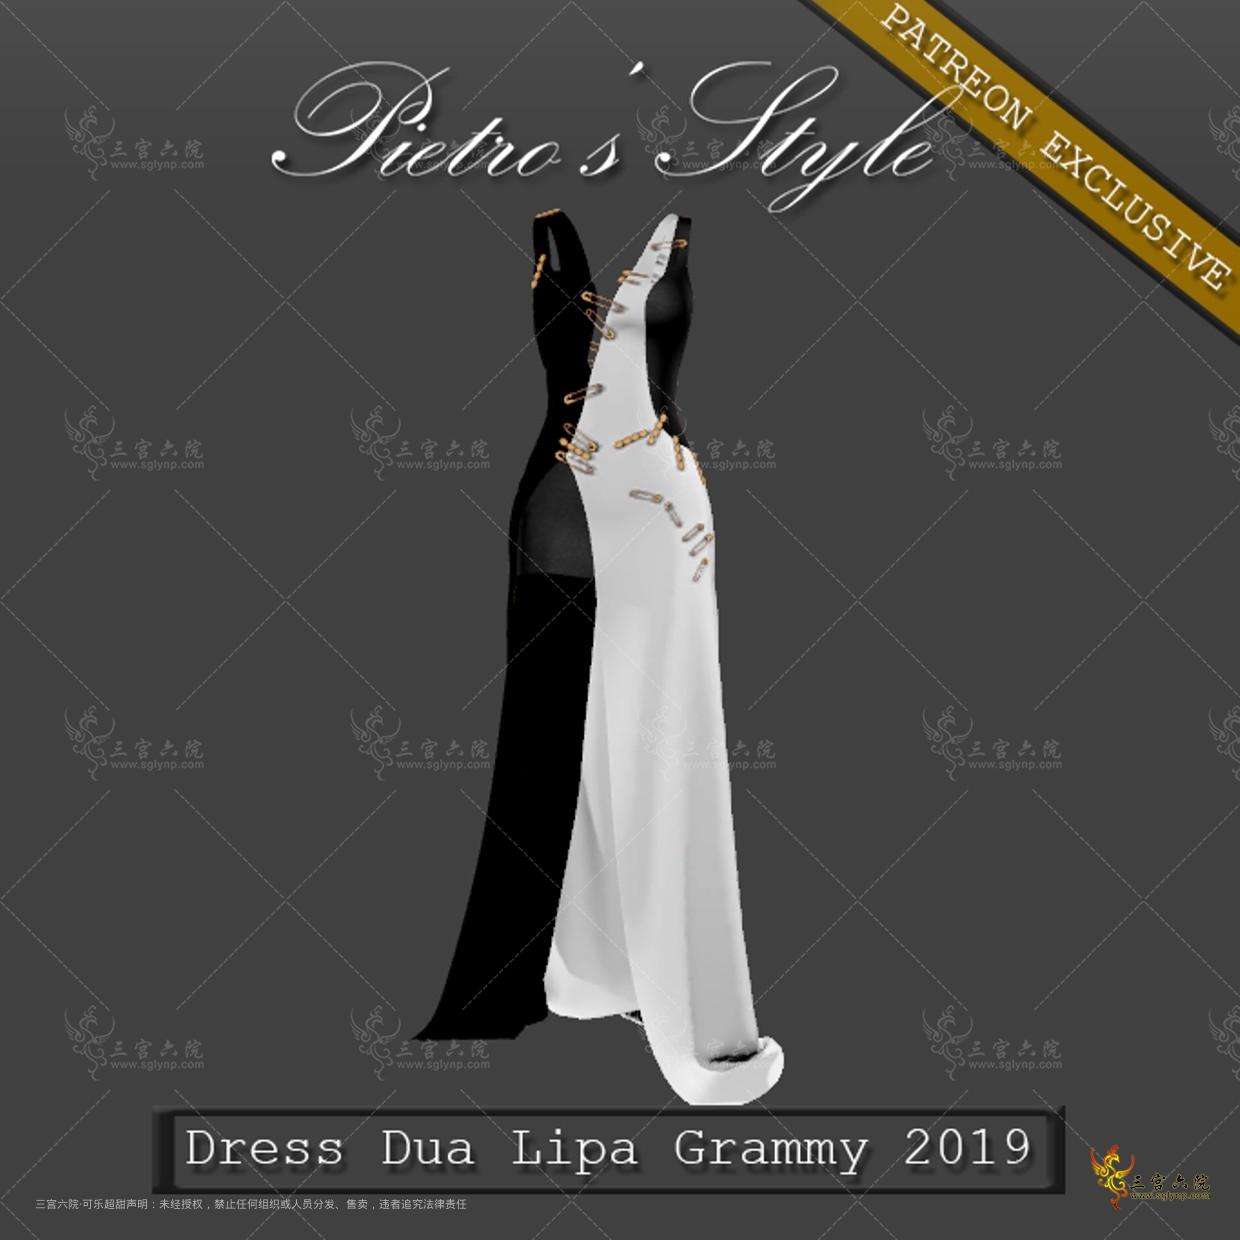 (Pietro's Style) - Dress Dua Lipa Grammy 2019.png